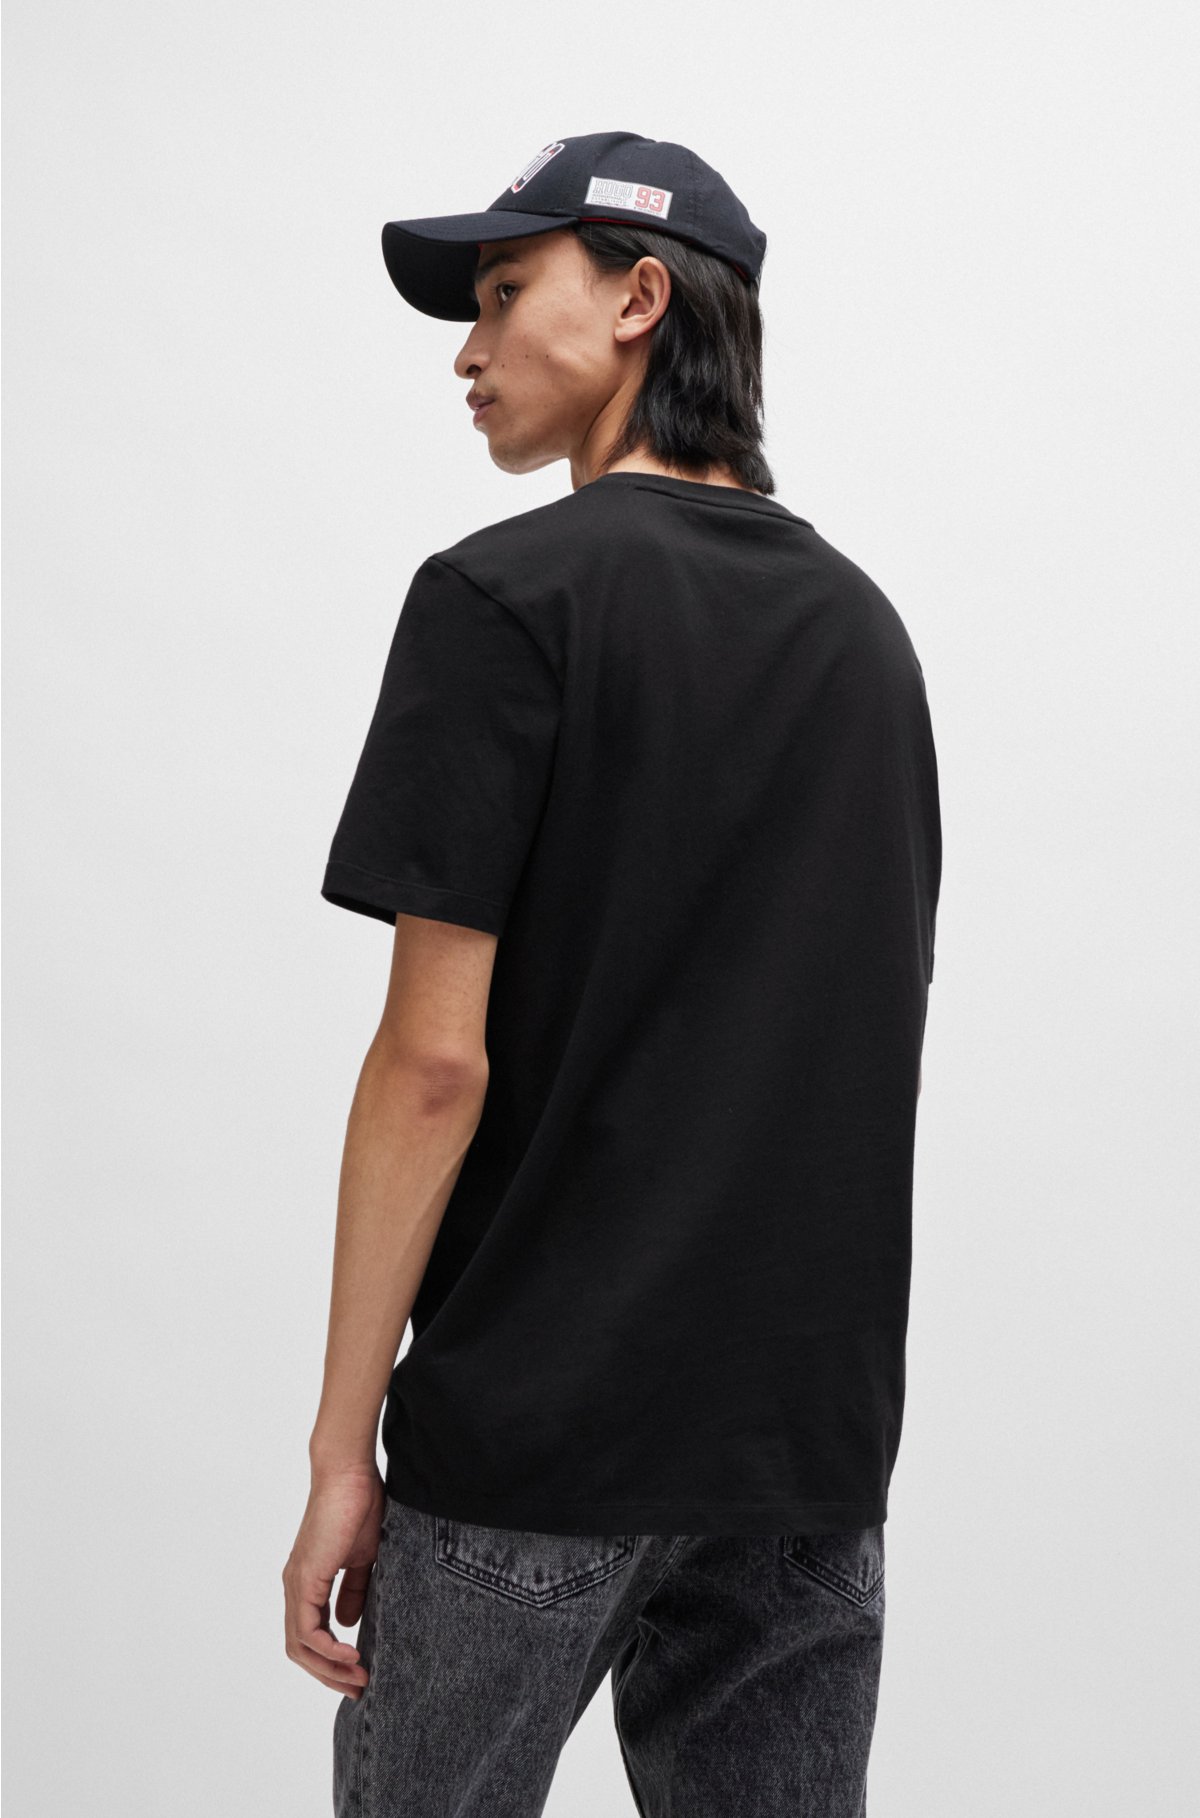 Cotton-jersey regular-fit T-shirt with logo print, Black